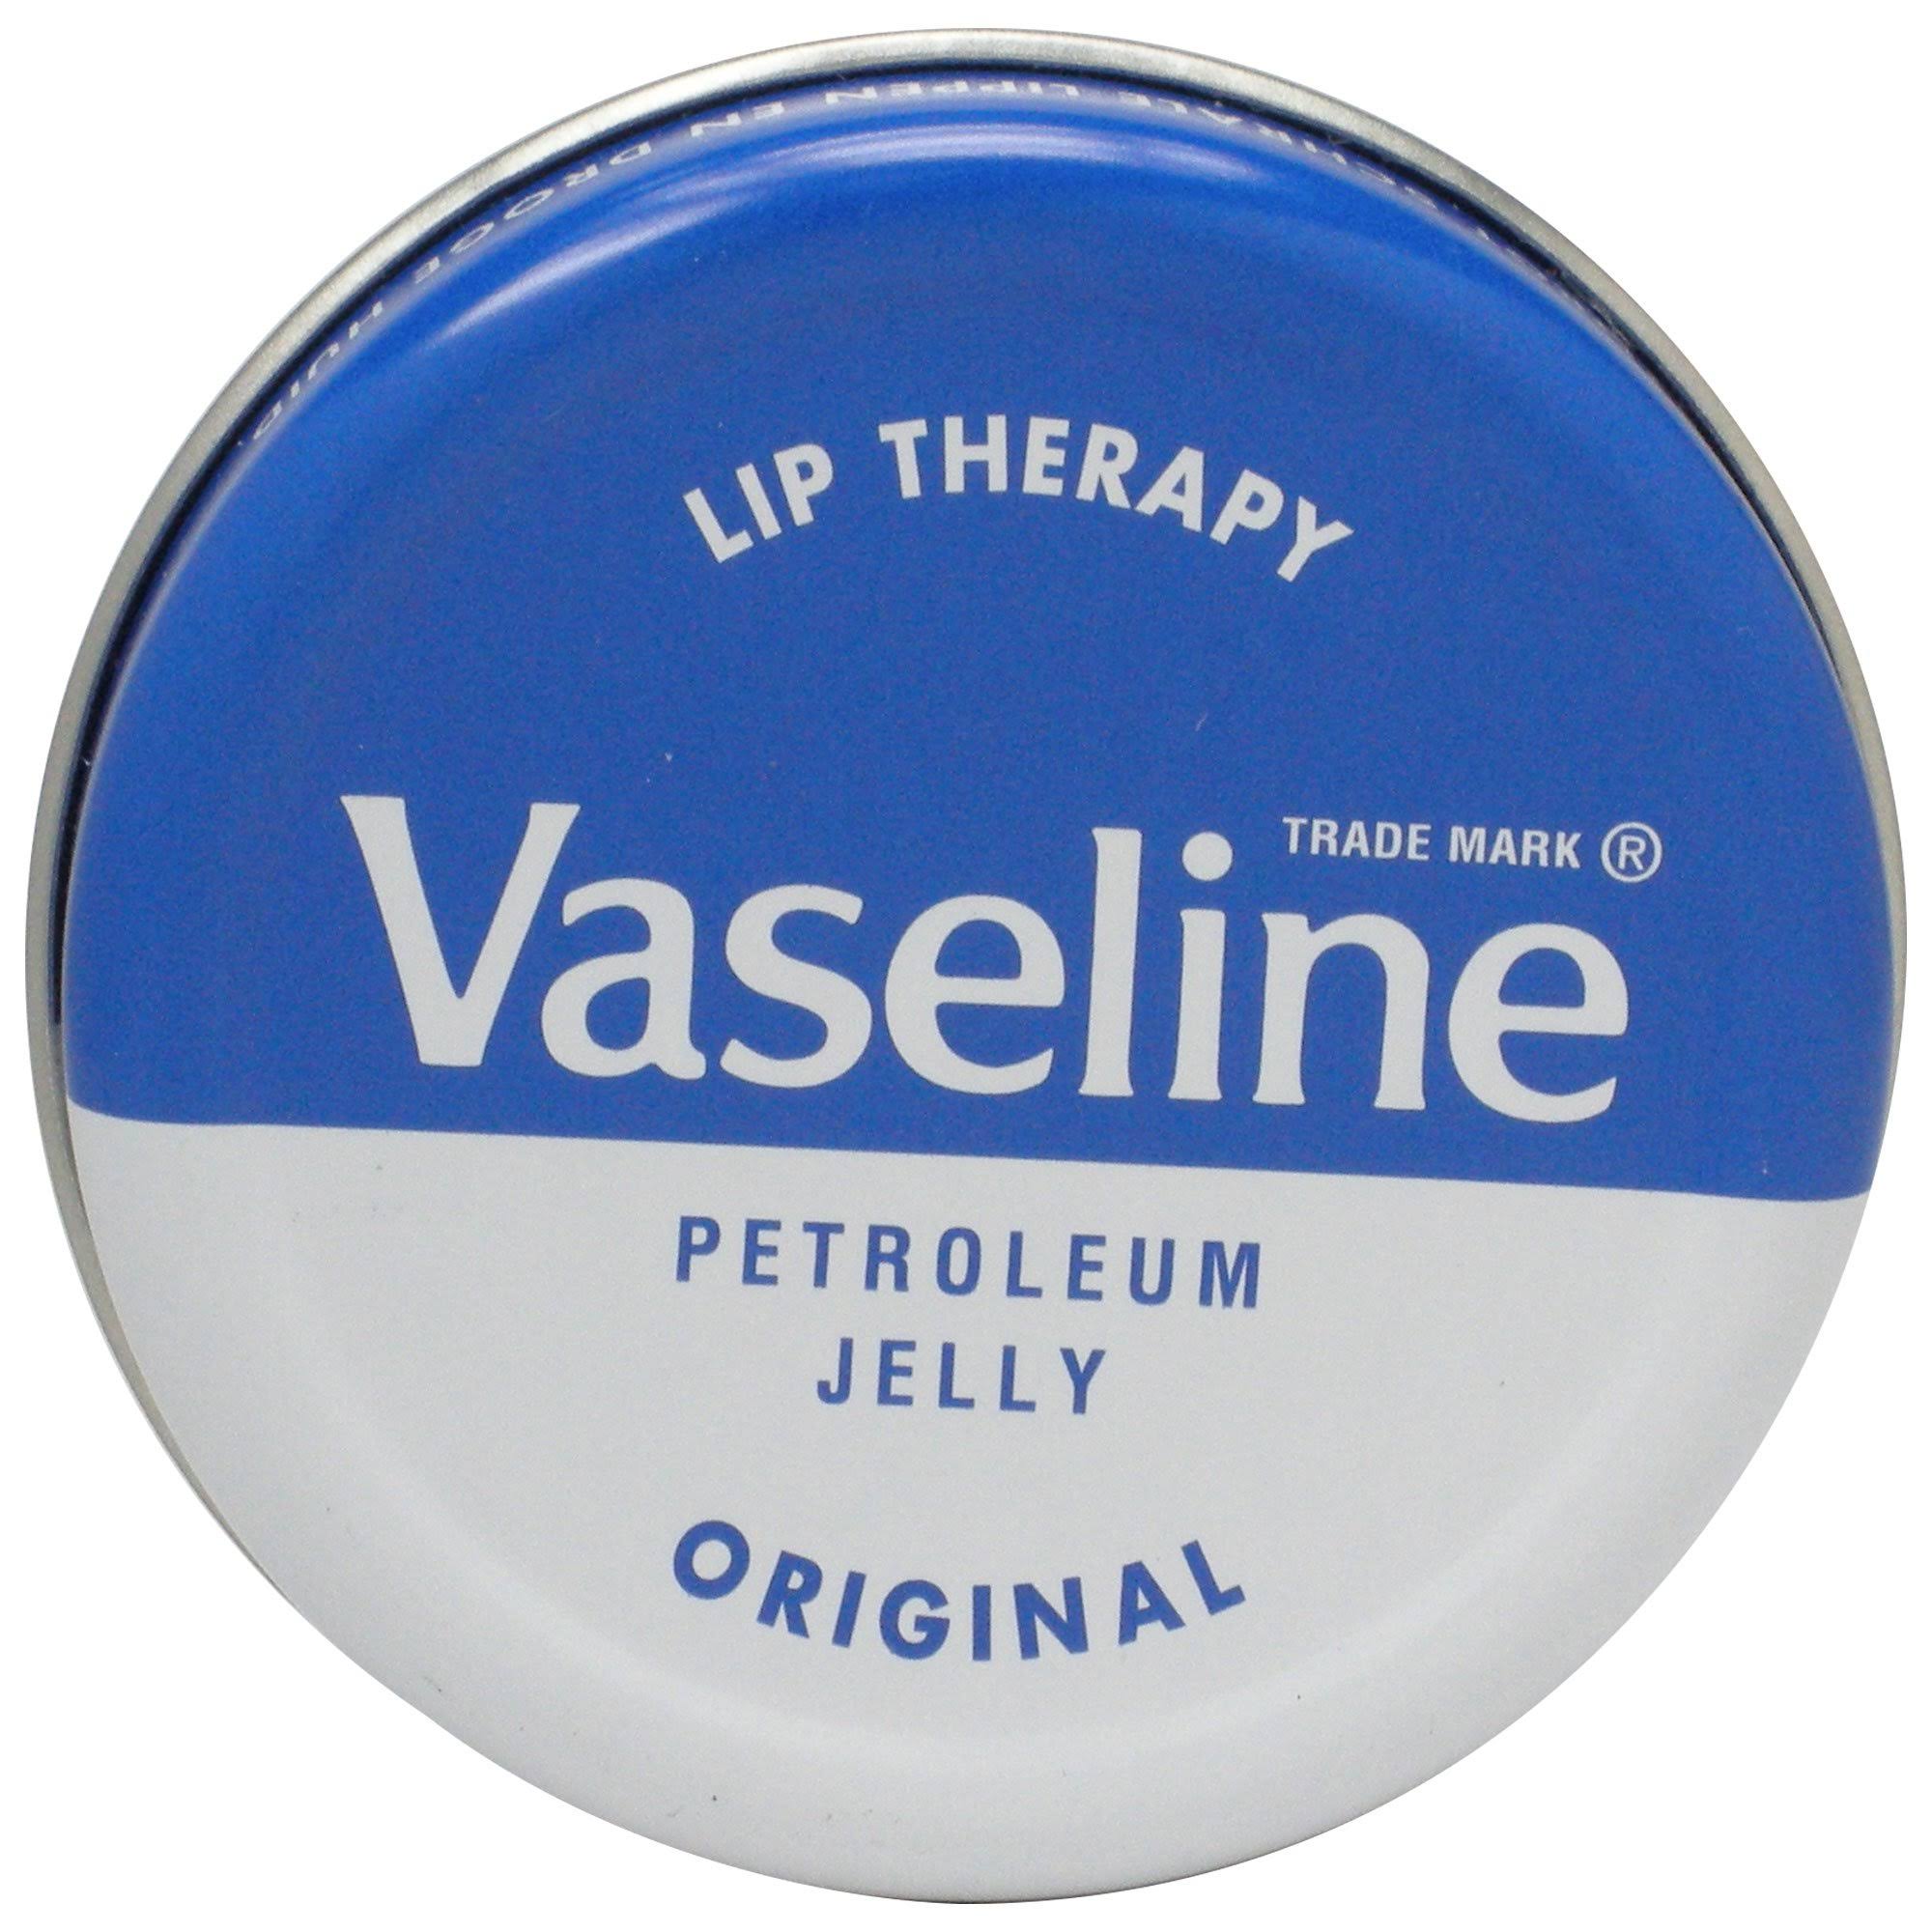 Vaseline Lip Therapy Petroleum Jelly - Original, 20g